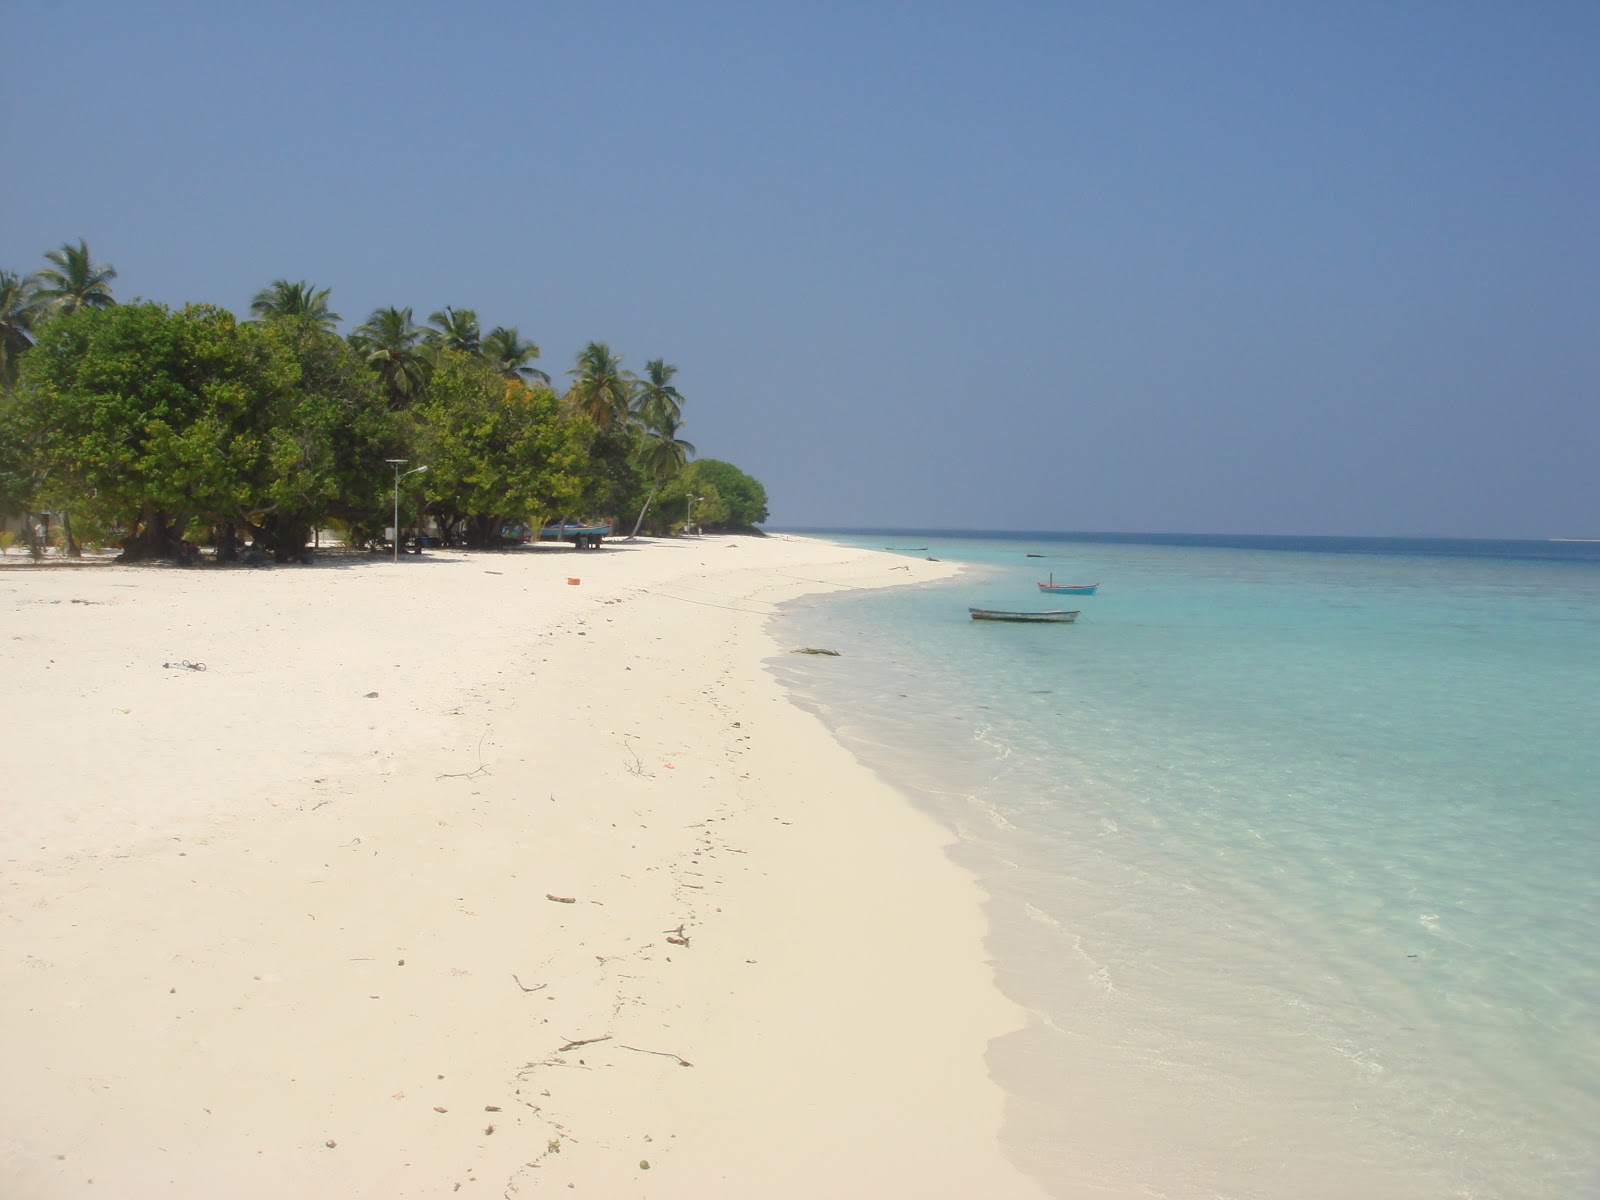 Foto di Fainu Island Beach con una superficie del sabbia bianca